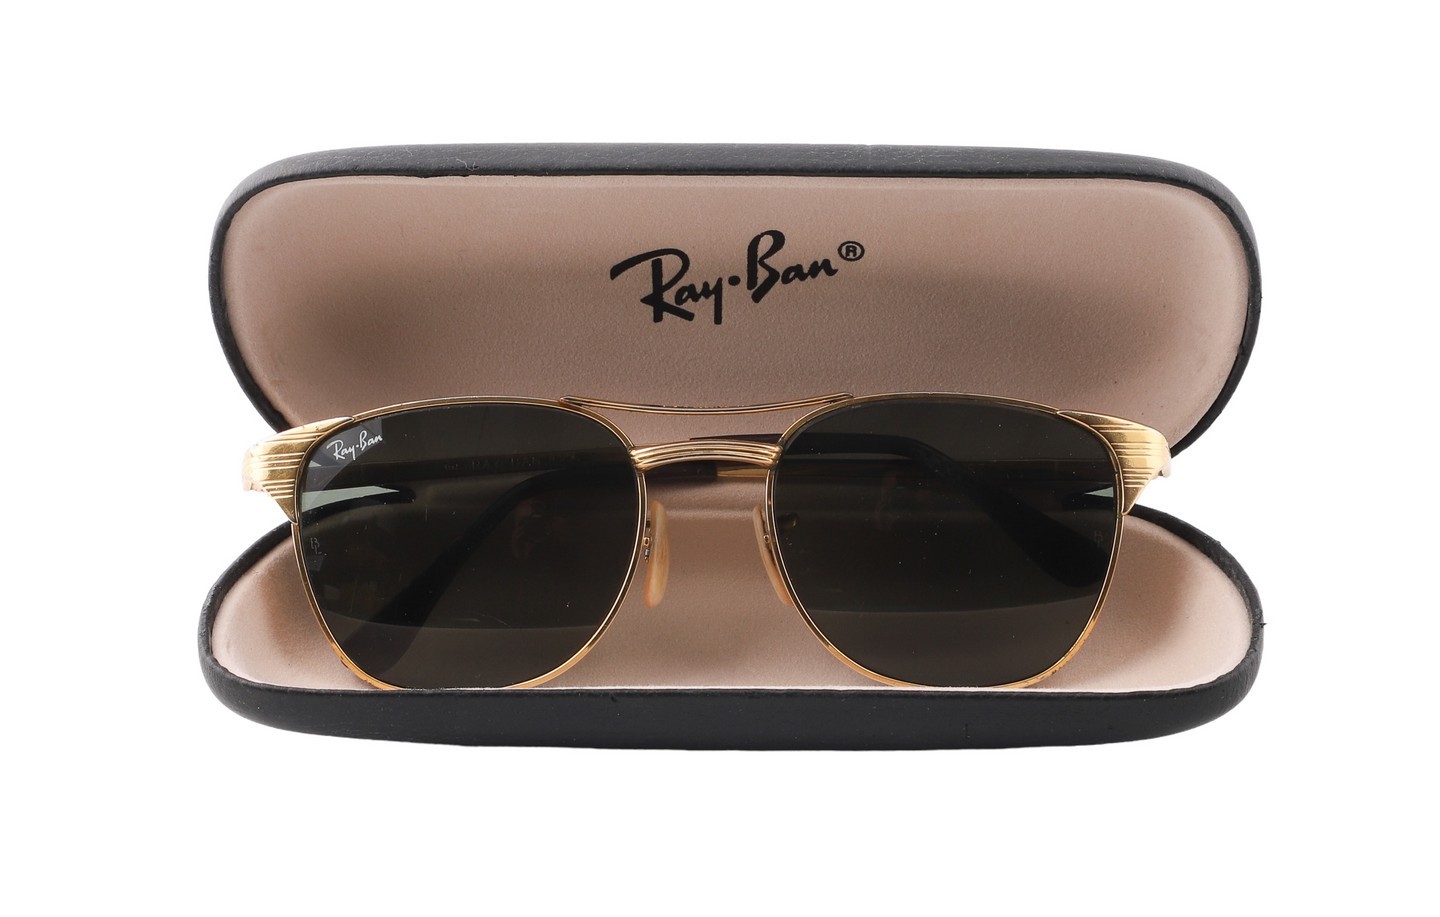 Vintage Signet B&L Ray Ban sunglasses,